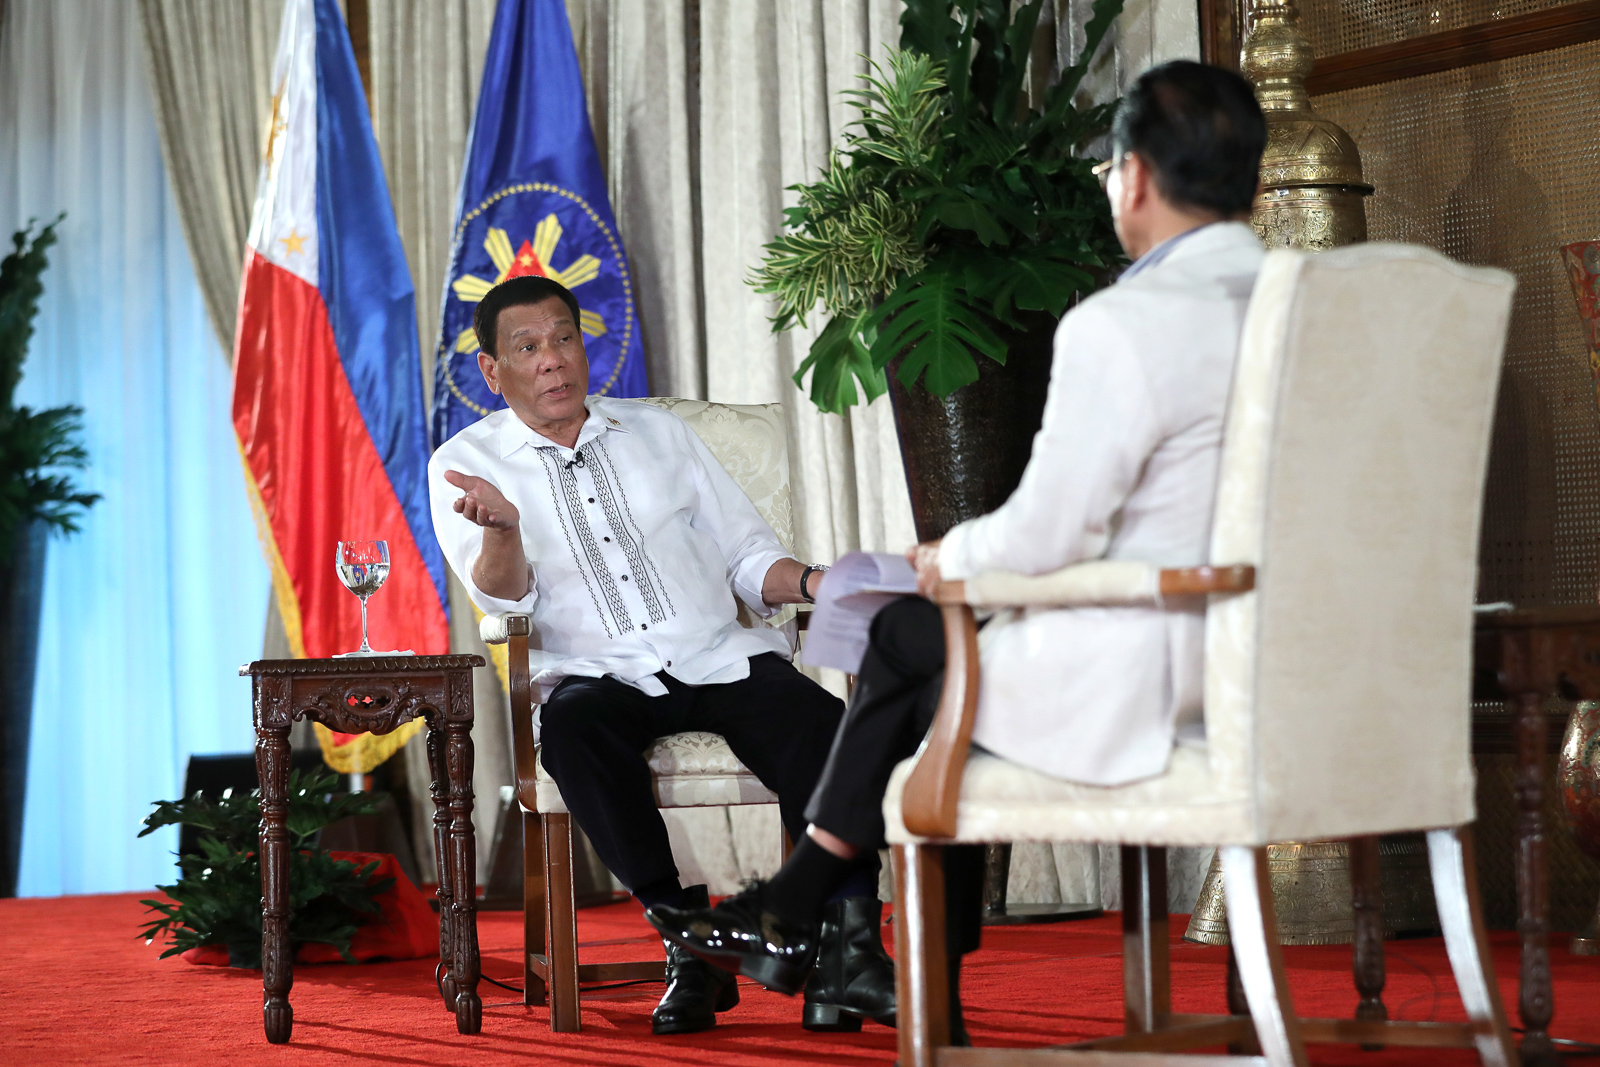 President Rodrigo Roa Duterte discusses the pressing concerns of the country during a dialogue with Chief Presidential Legal Counsel Salvador Panelo at the Malacañan Palace on September 11, 2018. ROBINSON NIÑAL JR./PRESIDENTIAL PHOTO